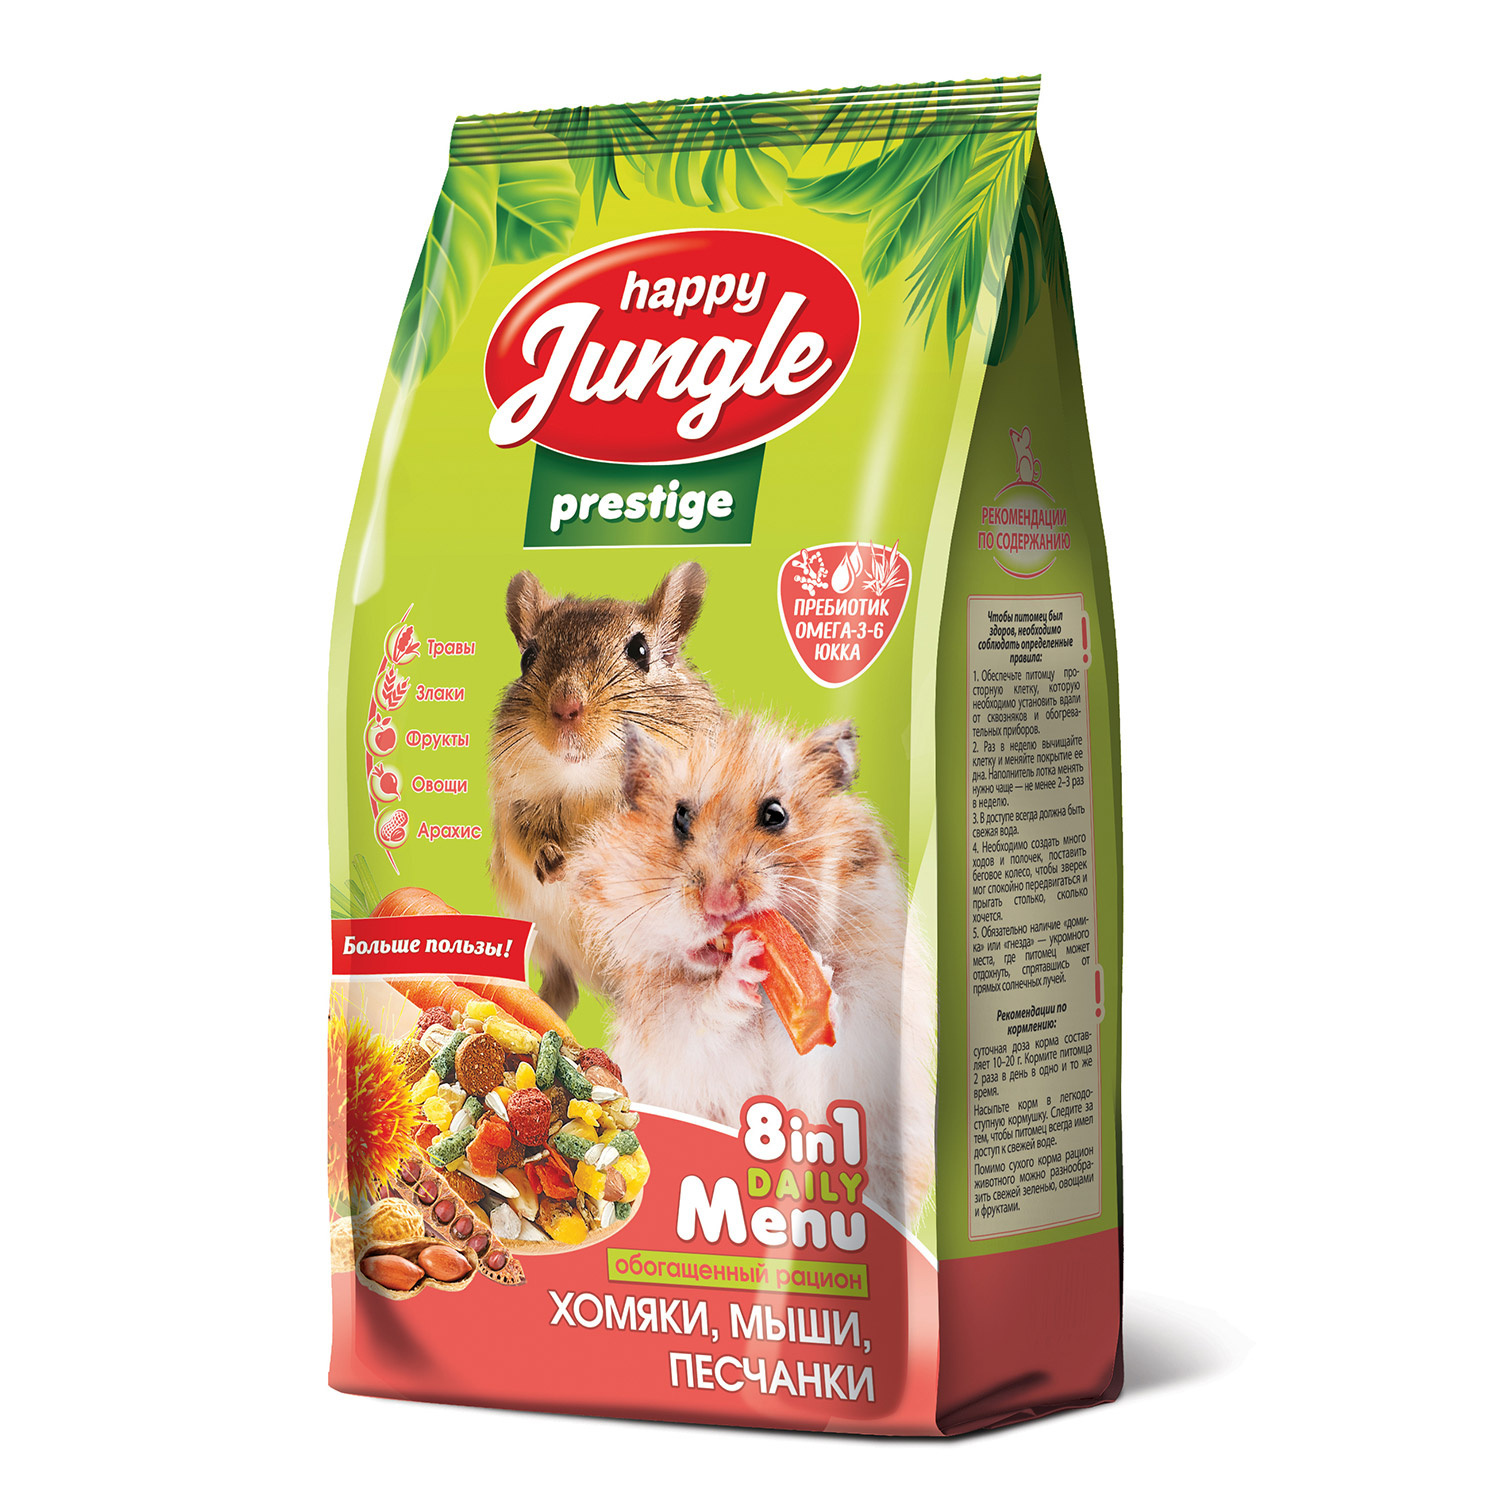 Happy Jungle Happy Jungle престиж Корм для хомяков, мышей, песчанок 500 г (500 г)